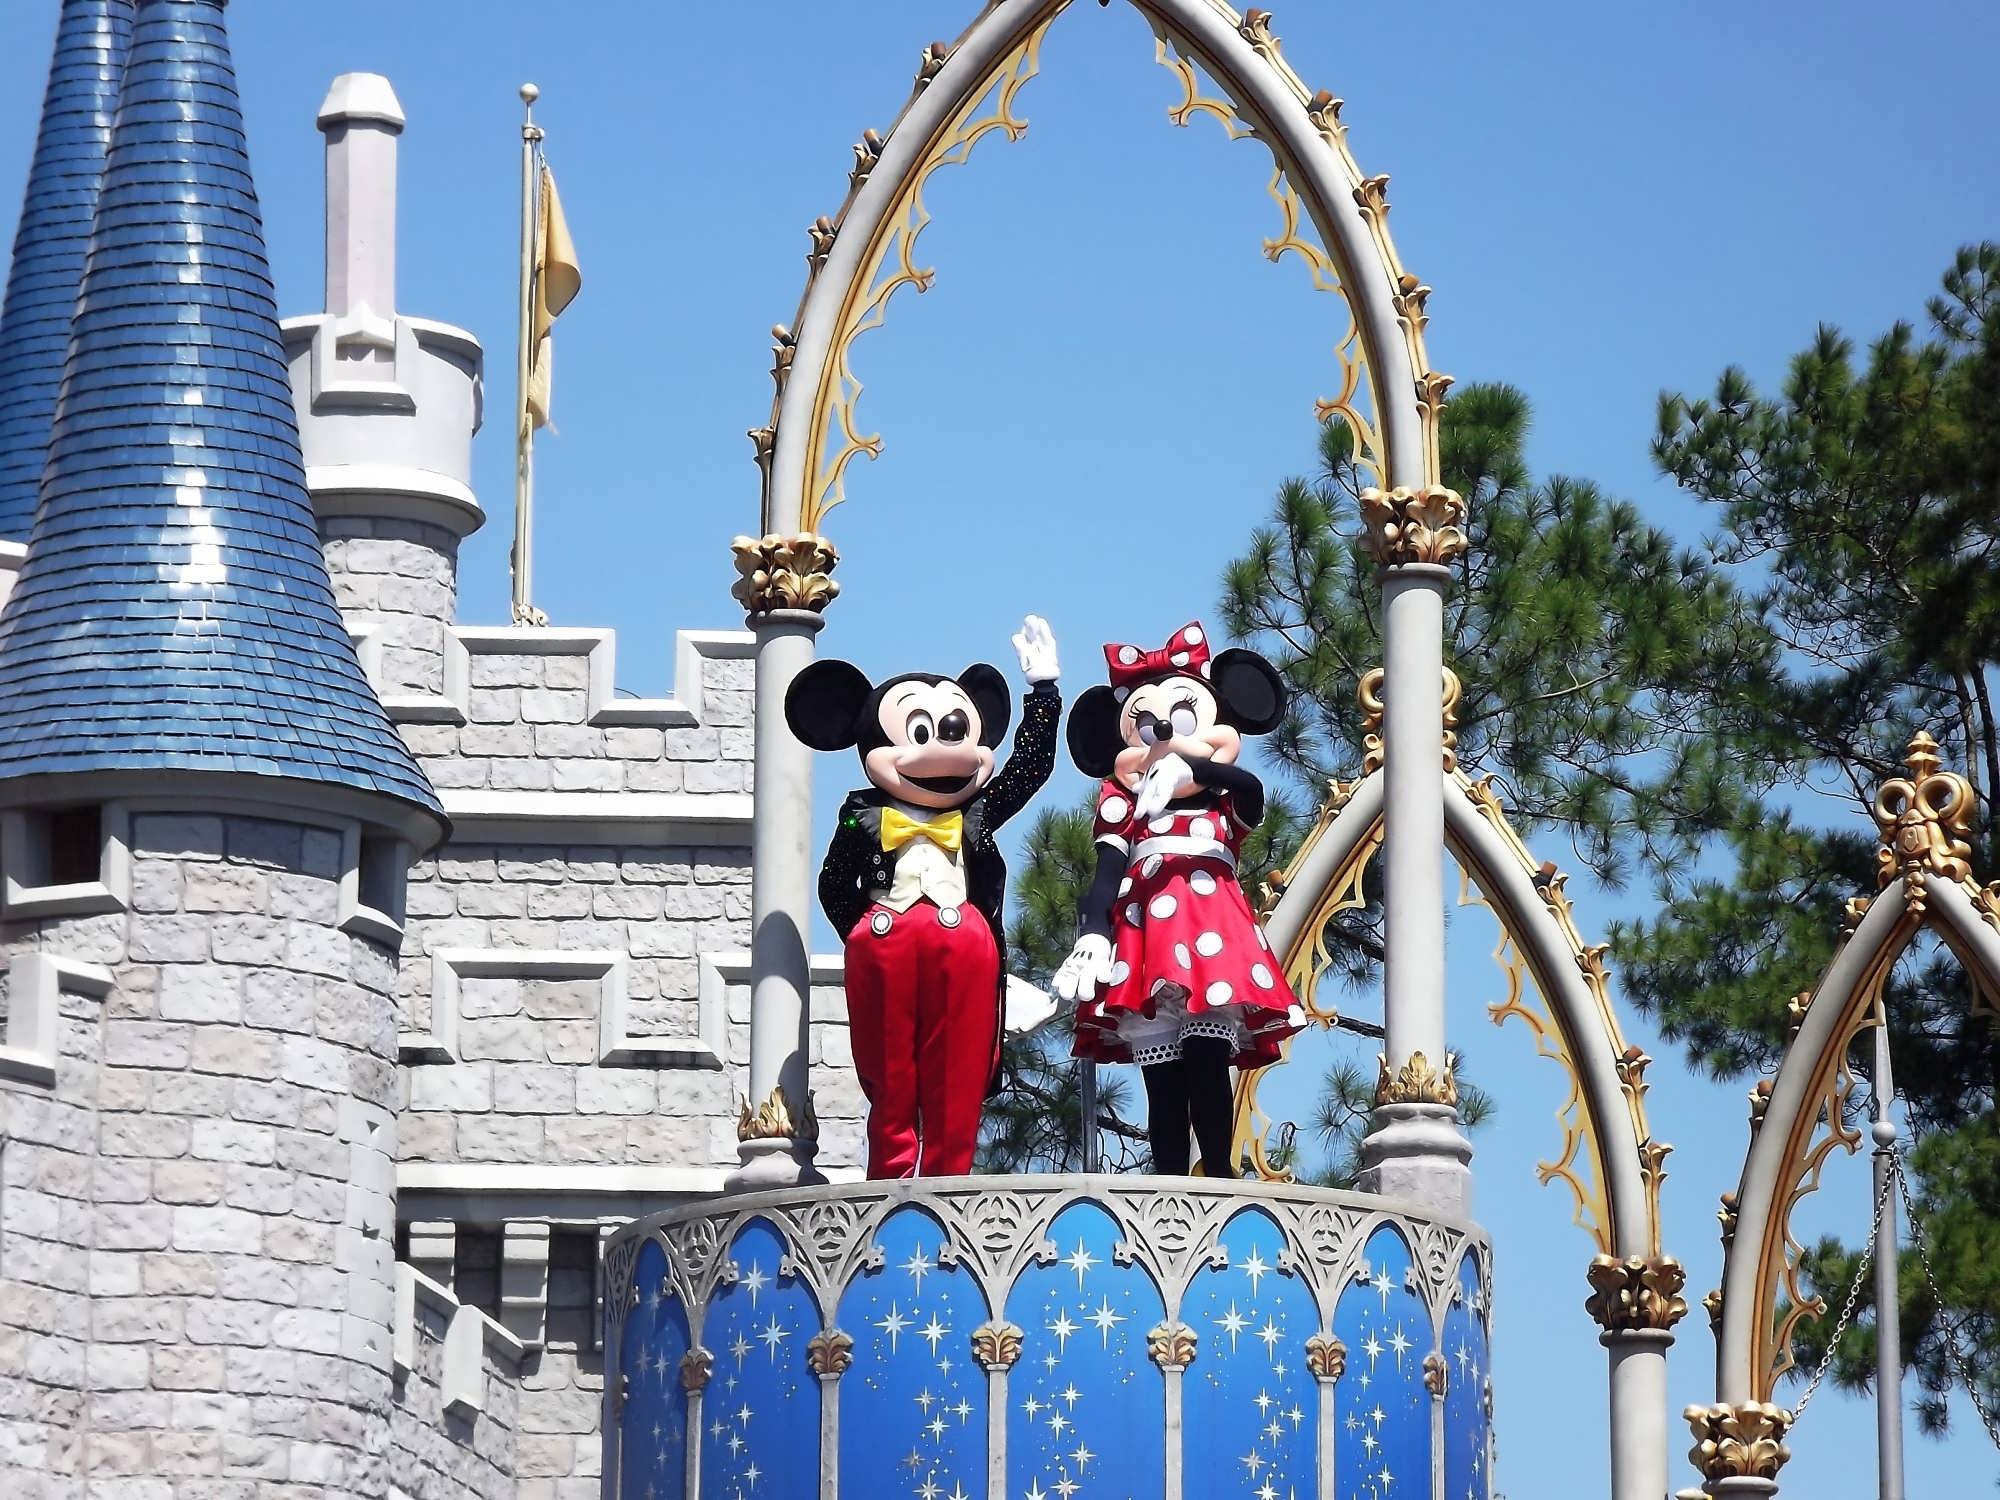 Disney world employees say park